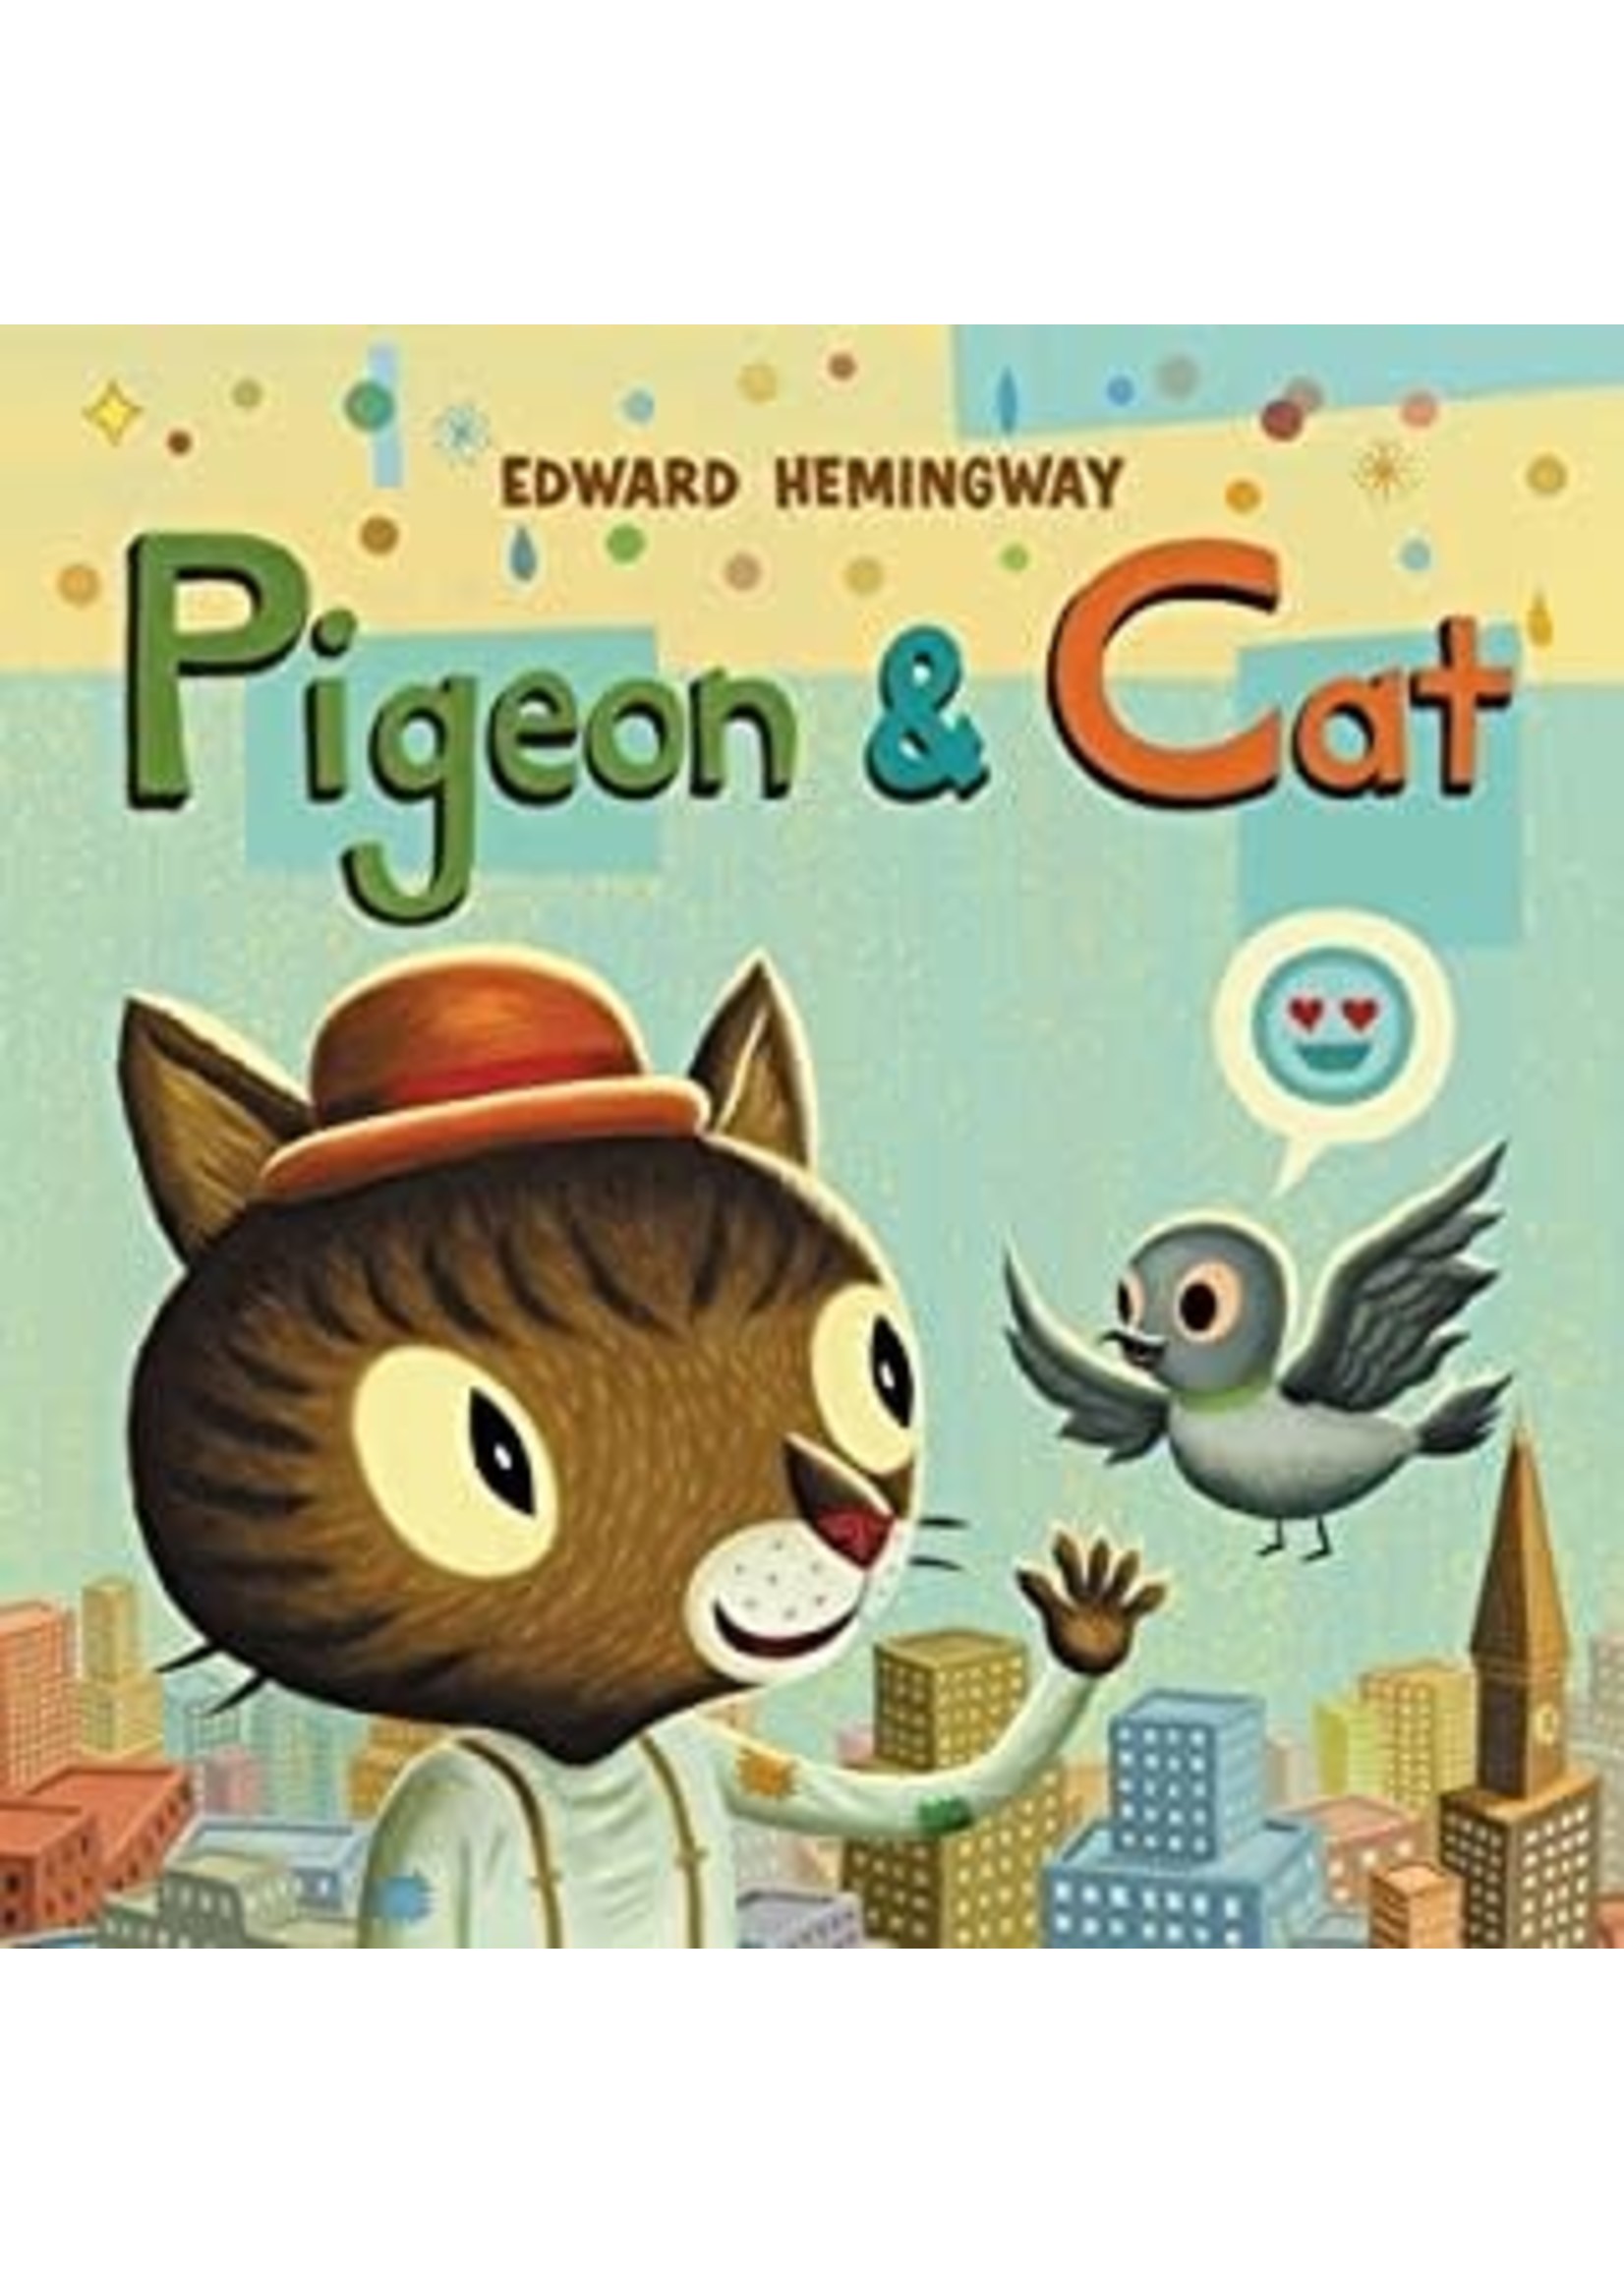 Pigeon & Cat by Edward Hemingway